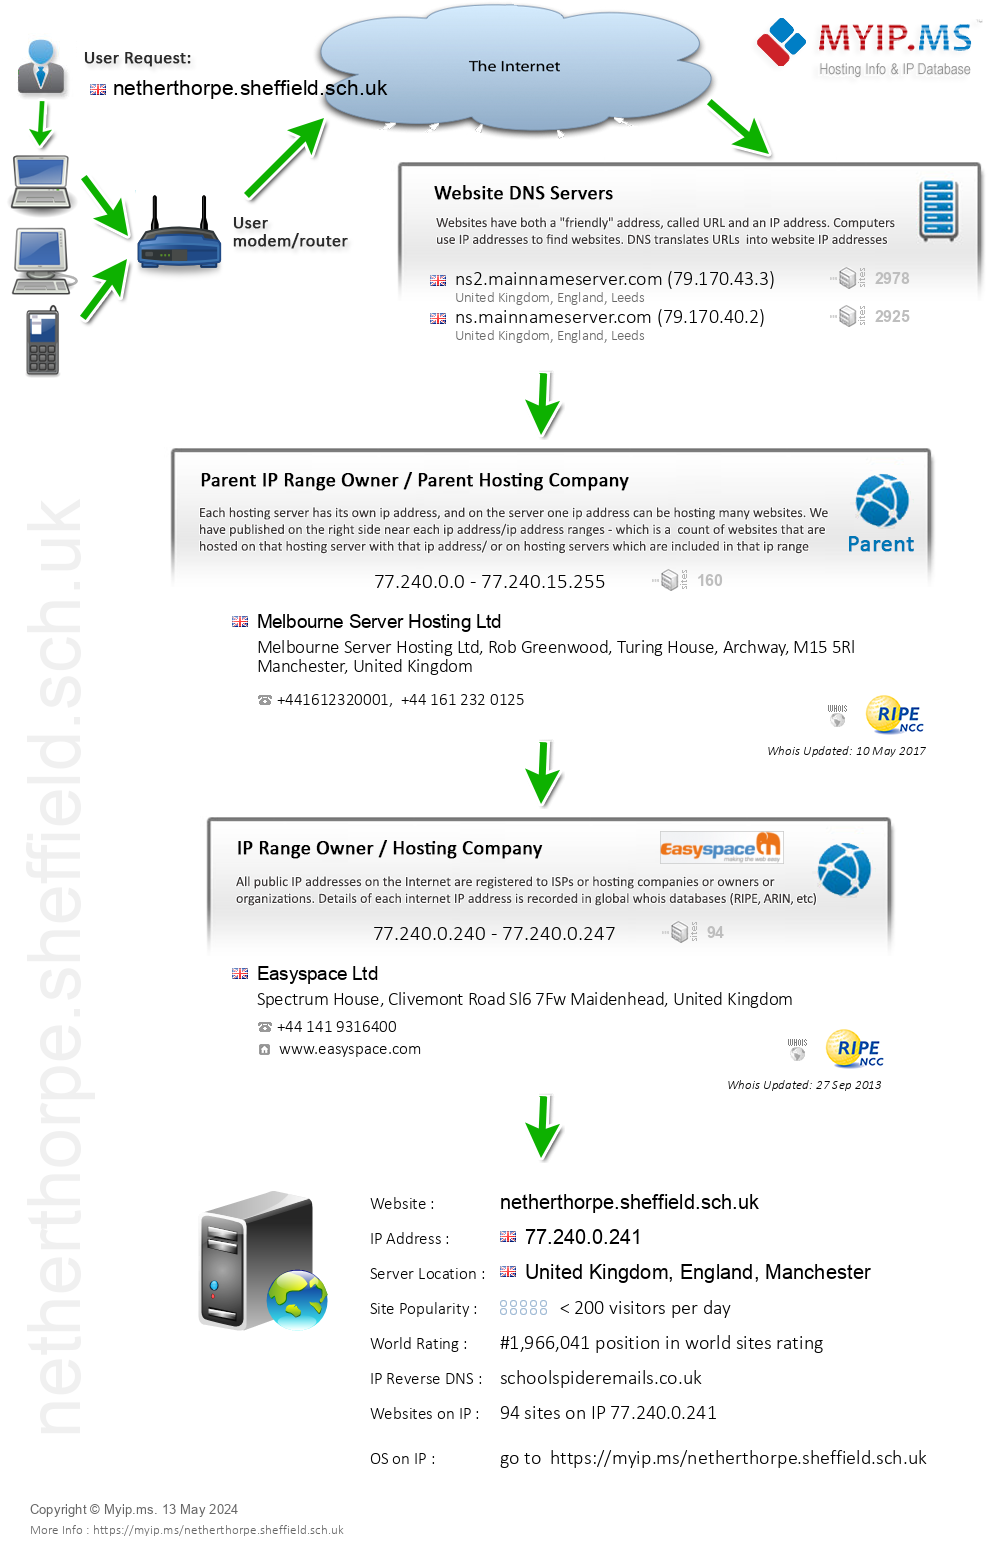 Netherthorpe.sheffield.sch.uk - Website Hosting Visual IP Diagram